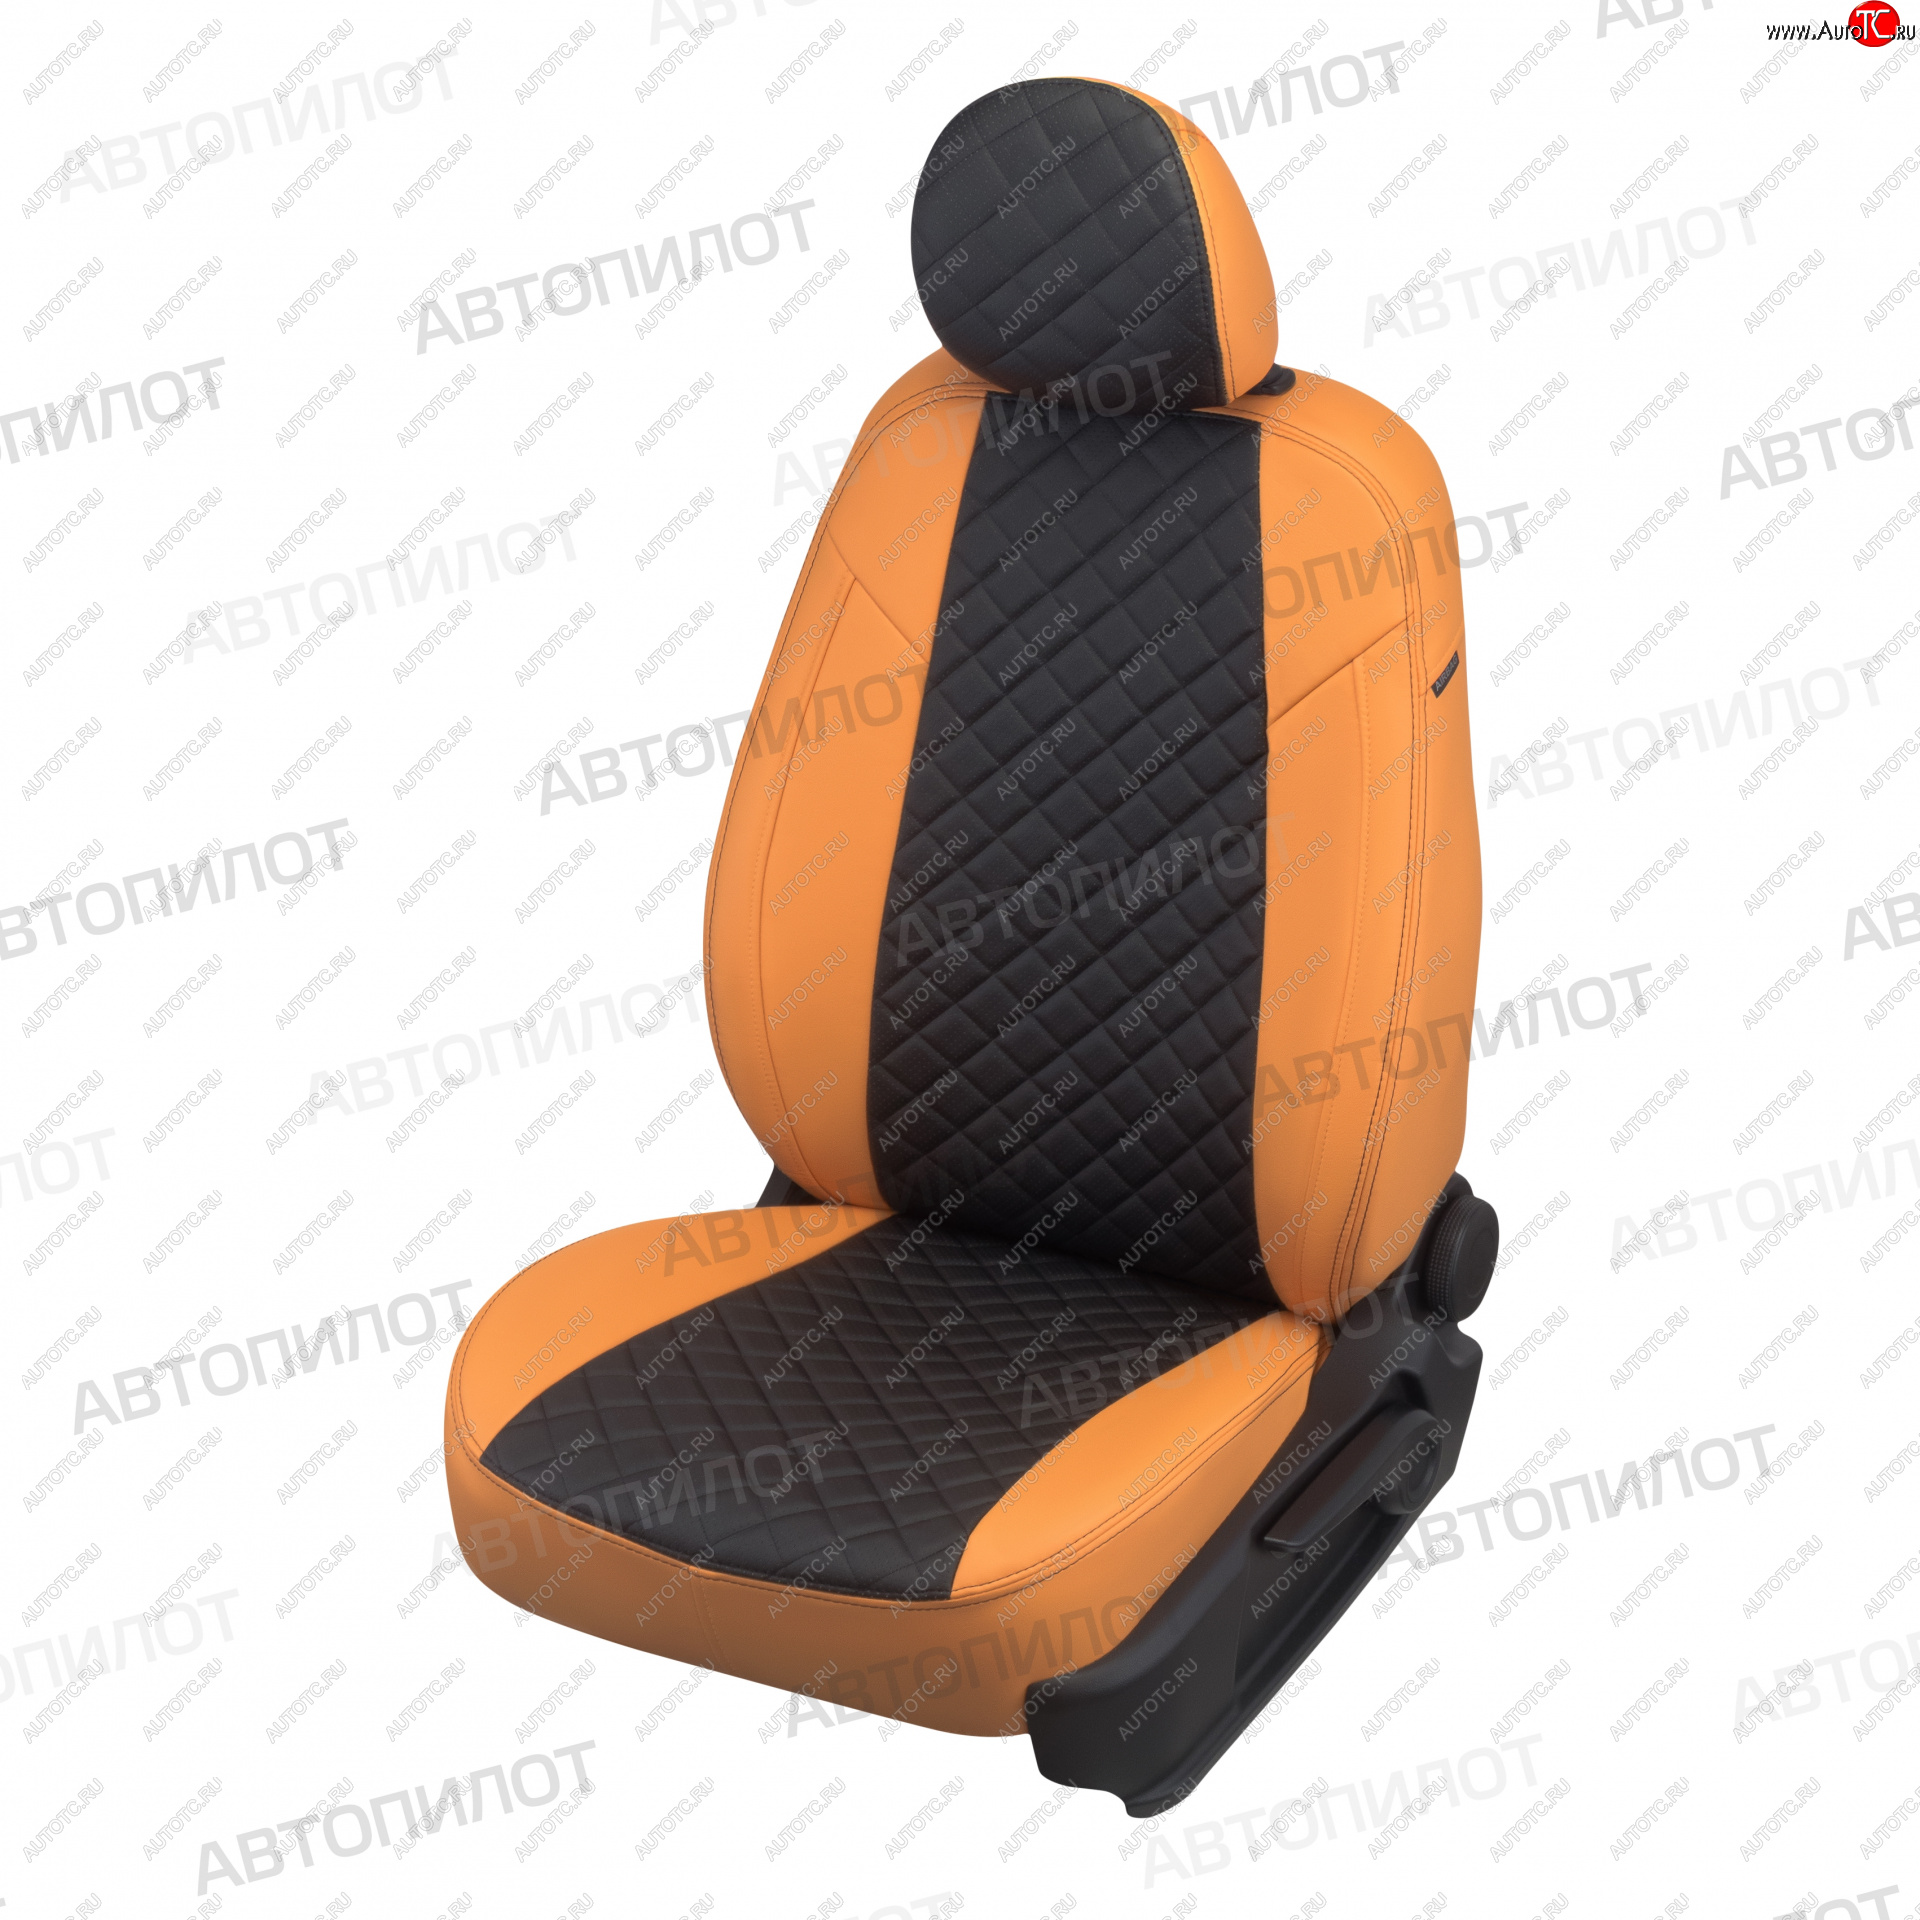 13 999 р. Чехлы сидений (экокожа) Автопилот Ромб  KIA Rio  1 DC (2000-2005) (оранж/черный)